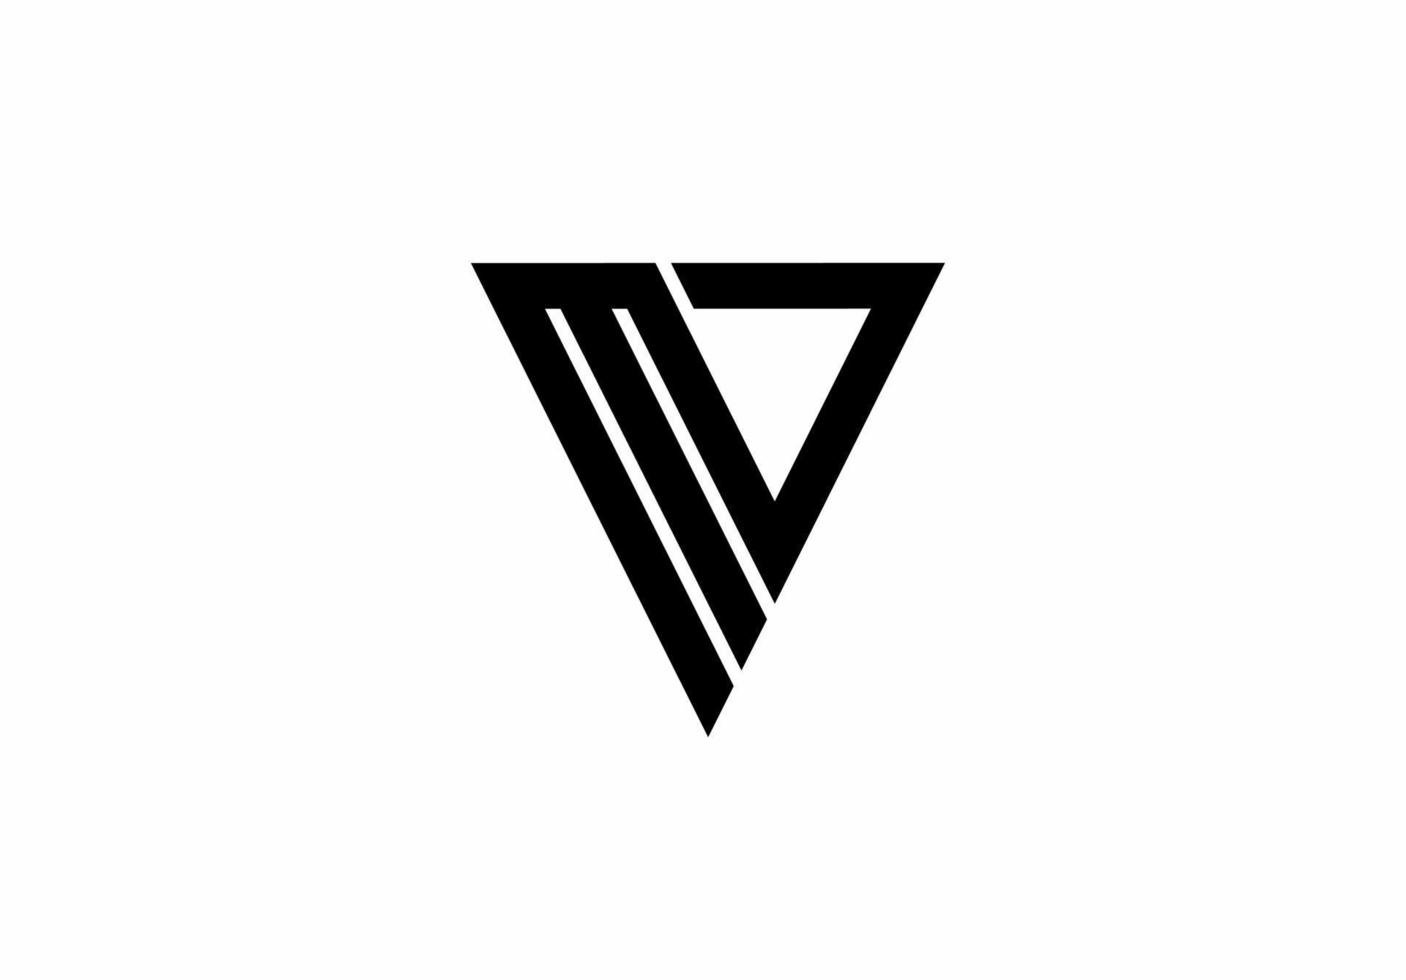 MV vm m v monogram logo isolated on white background vector